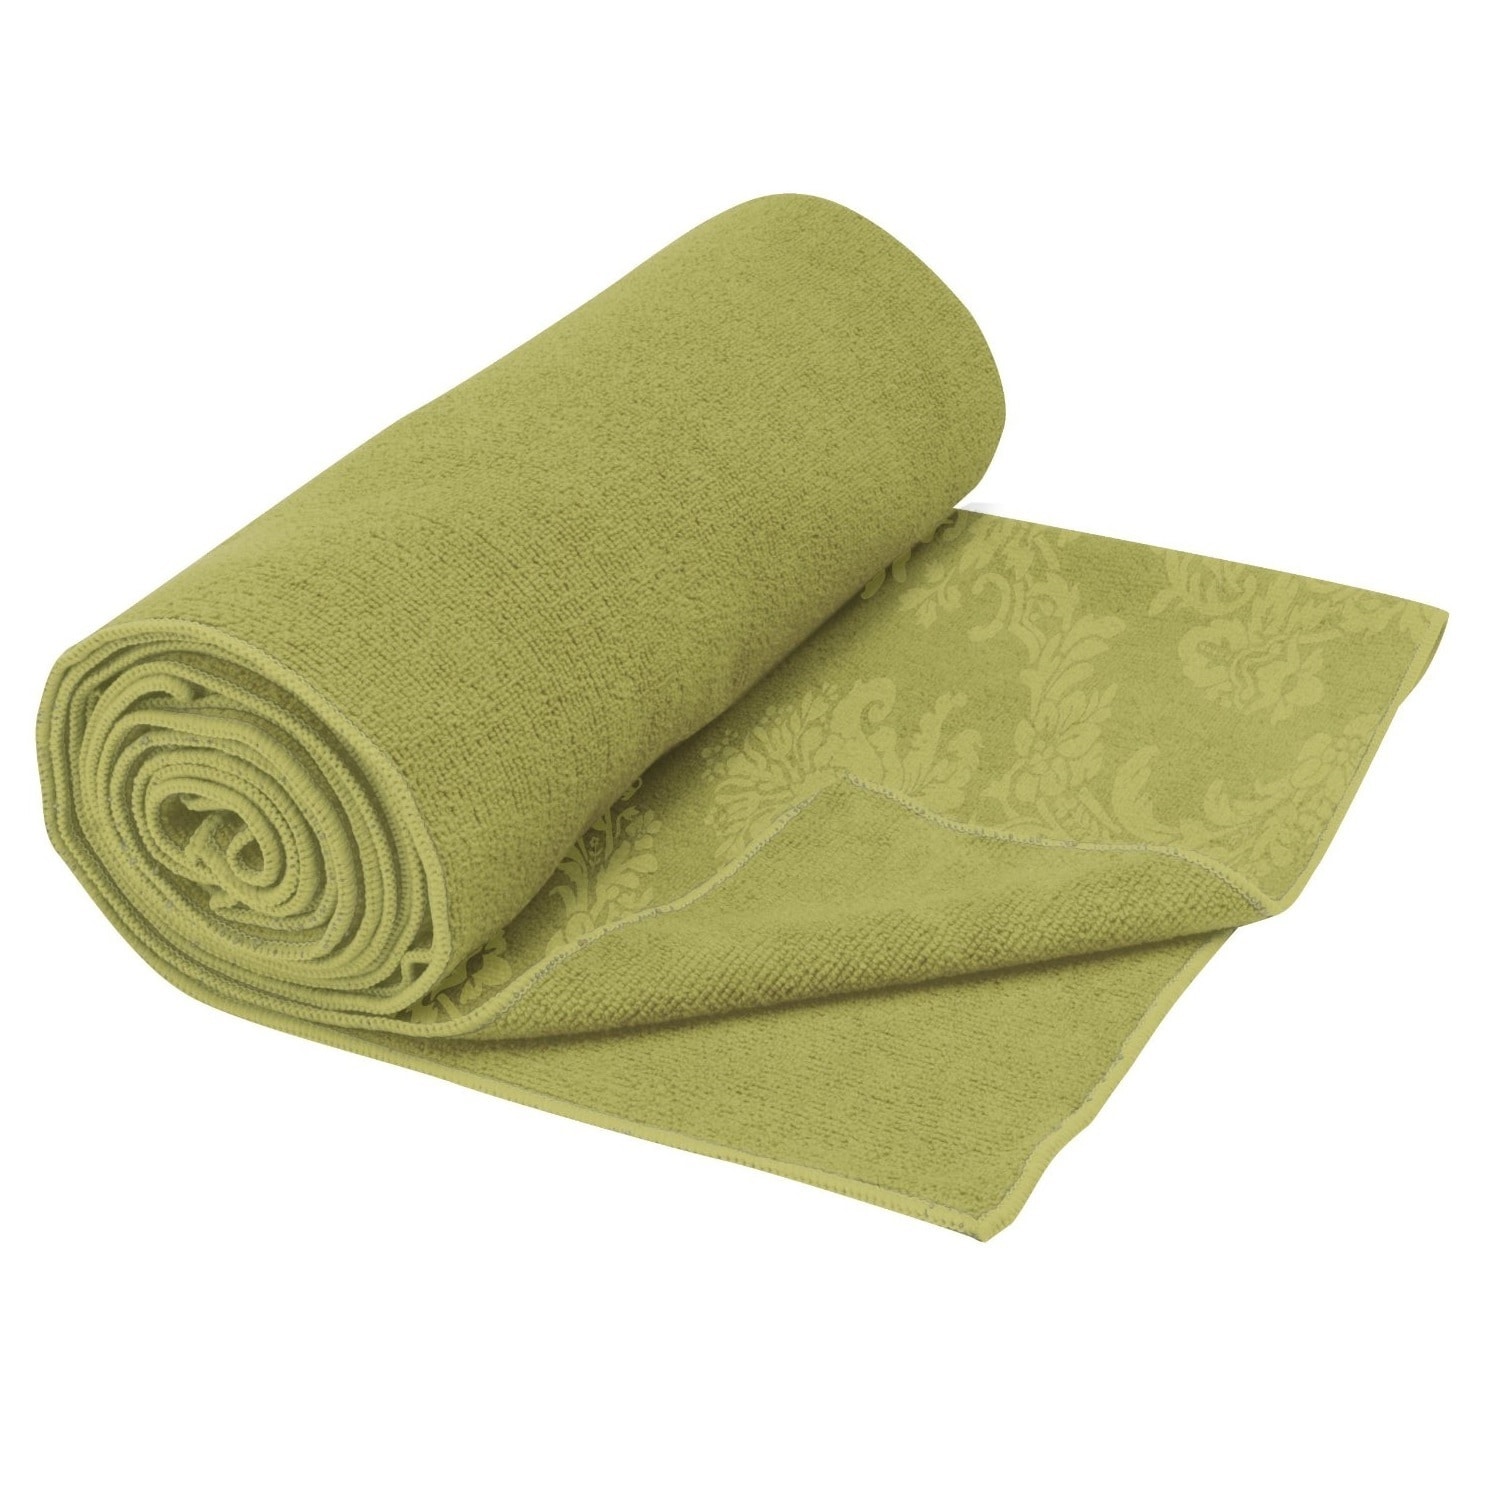 cotton yoga towel